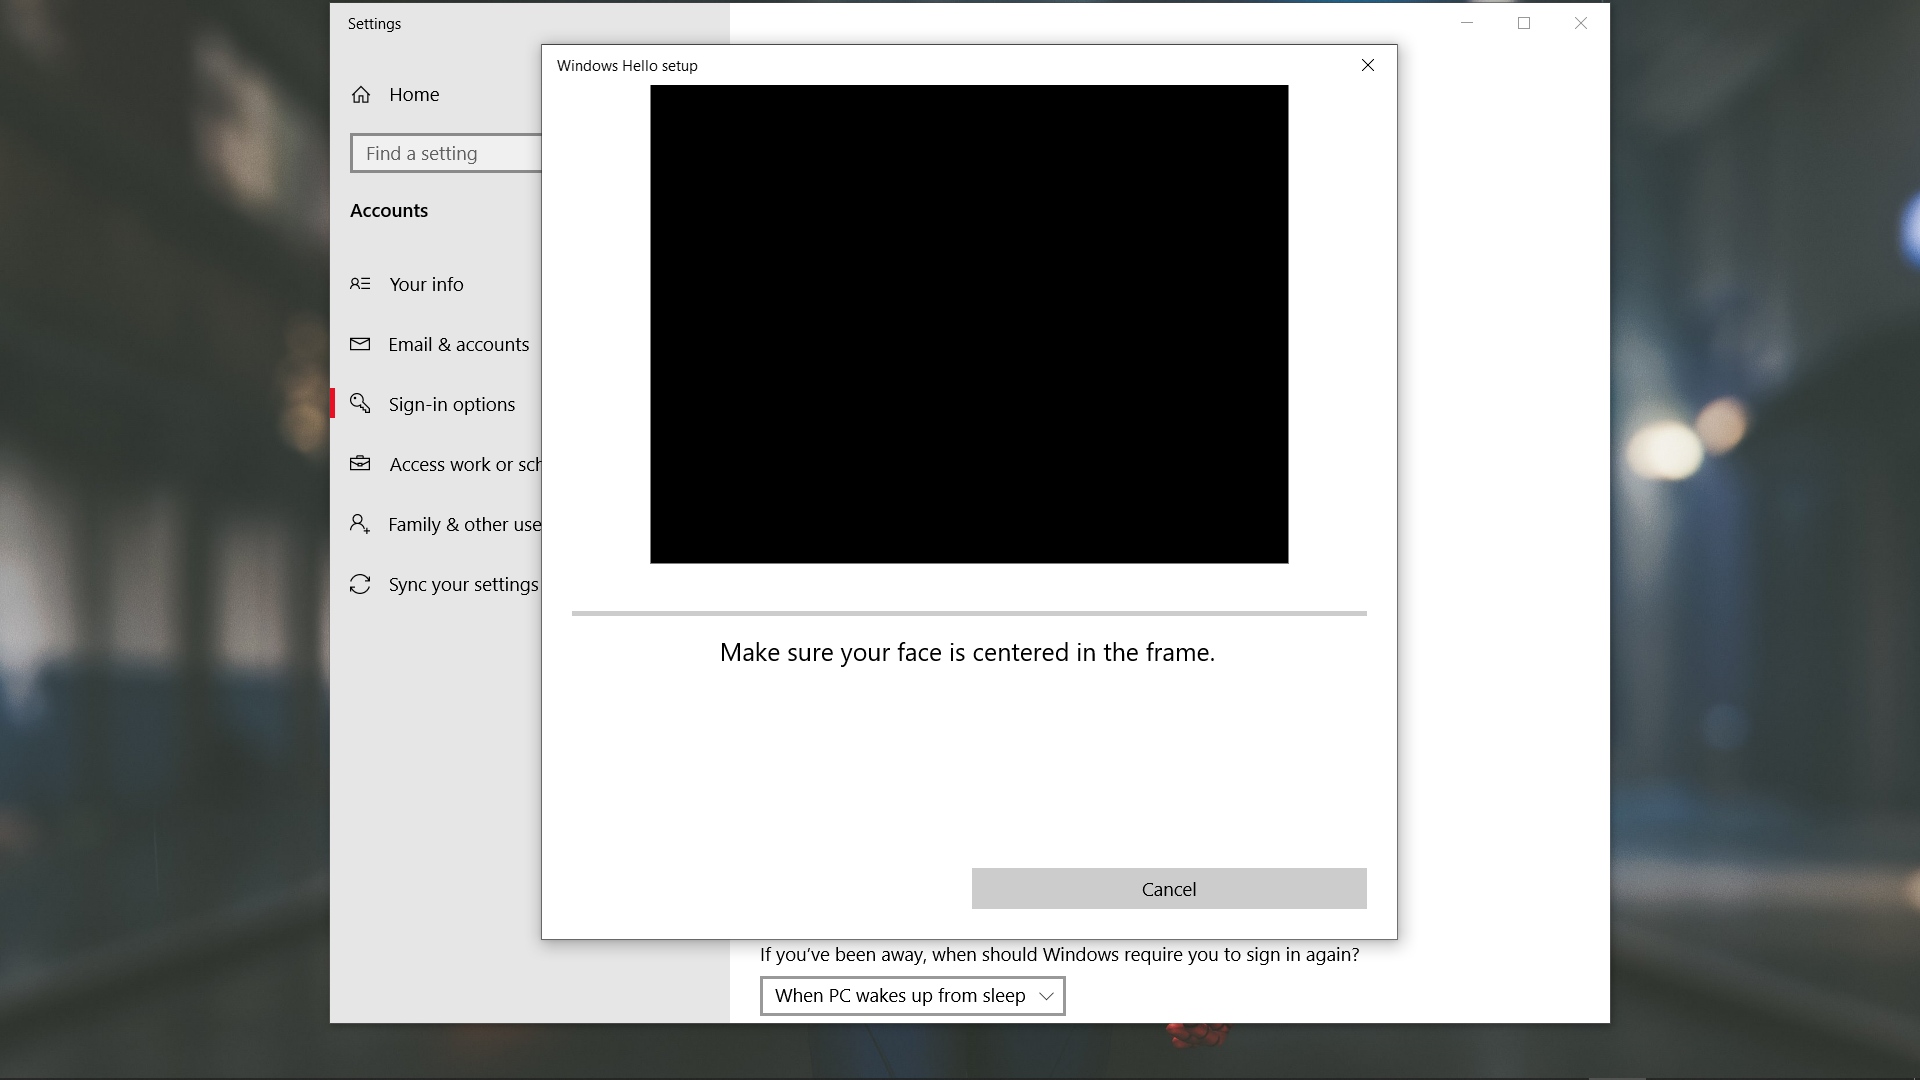 Alienware 15 R3 Windows Hello Not Working e169a6c4-d75a-4025-9215-b81b201efbaa?upload=true.png